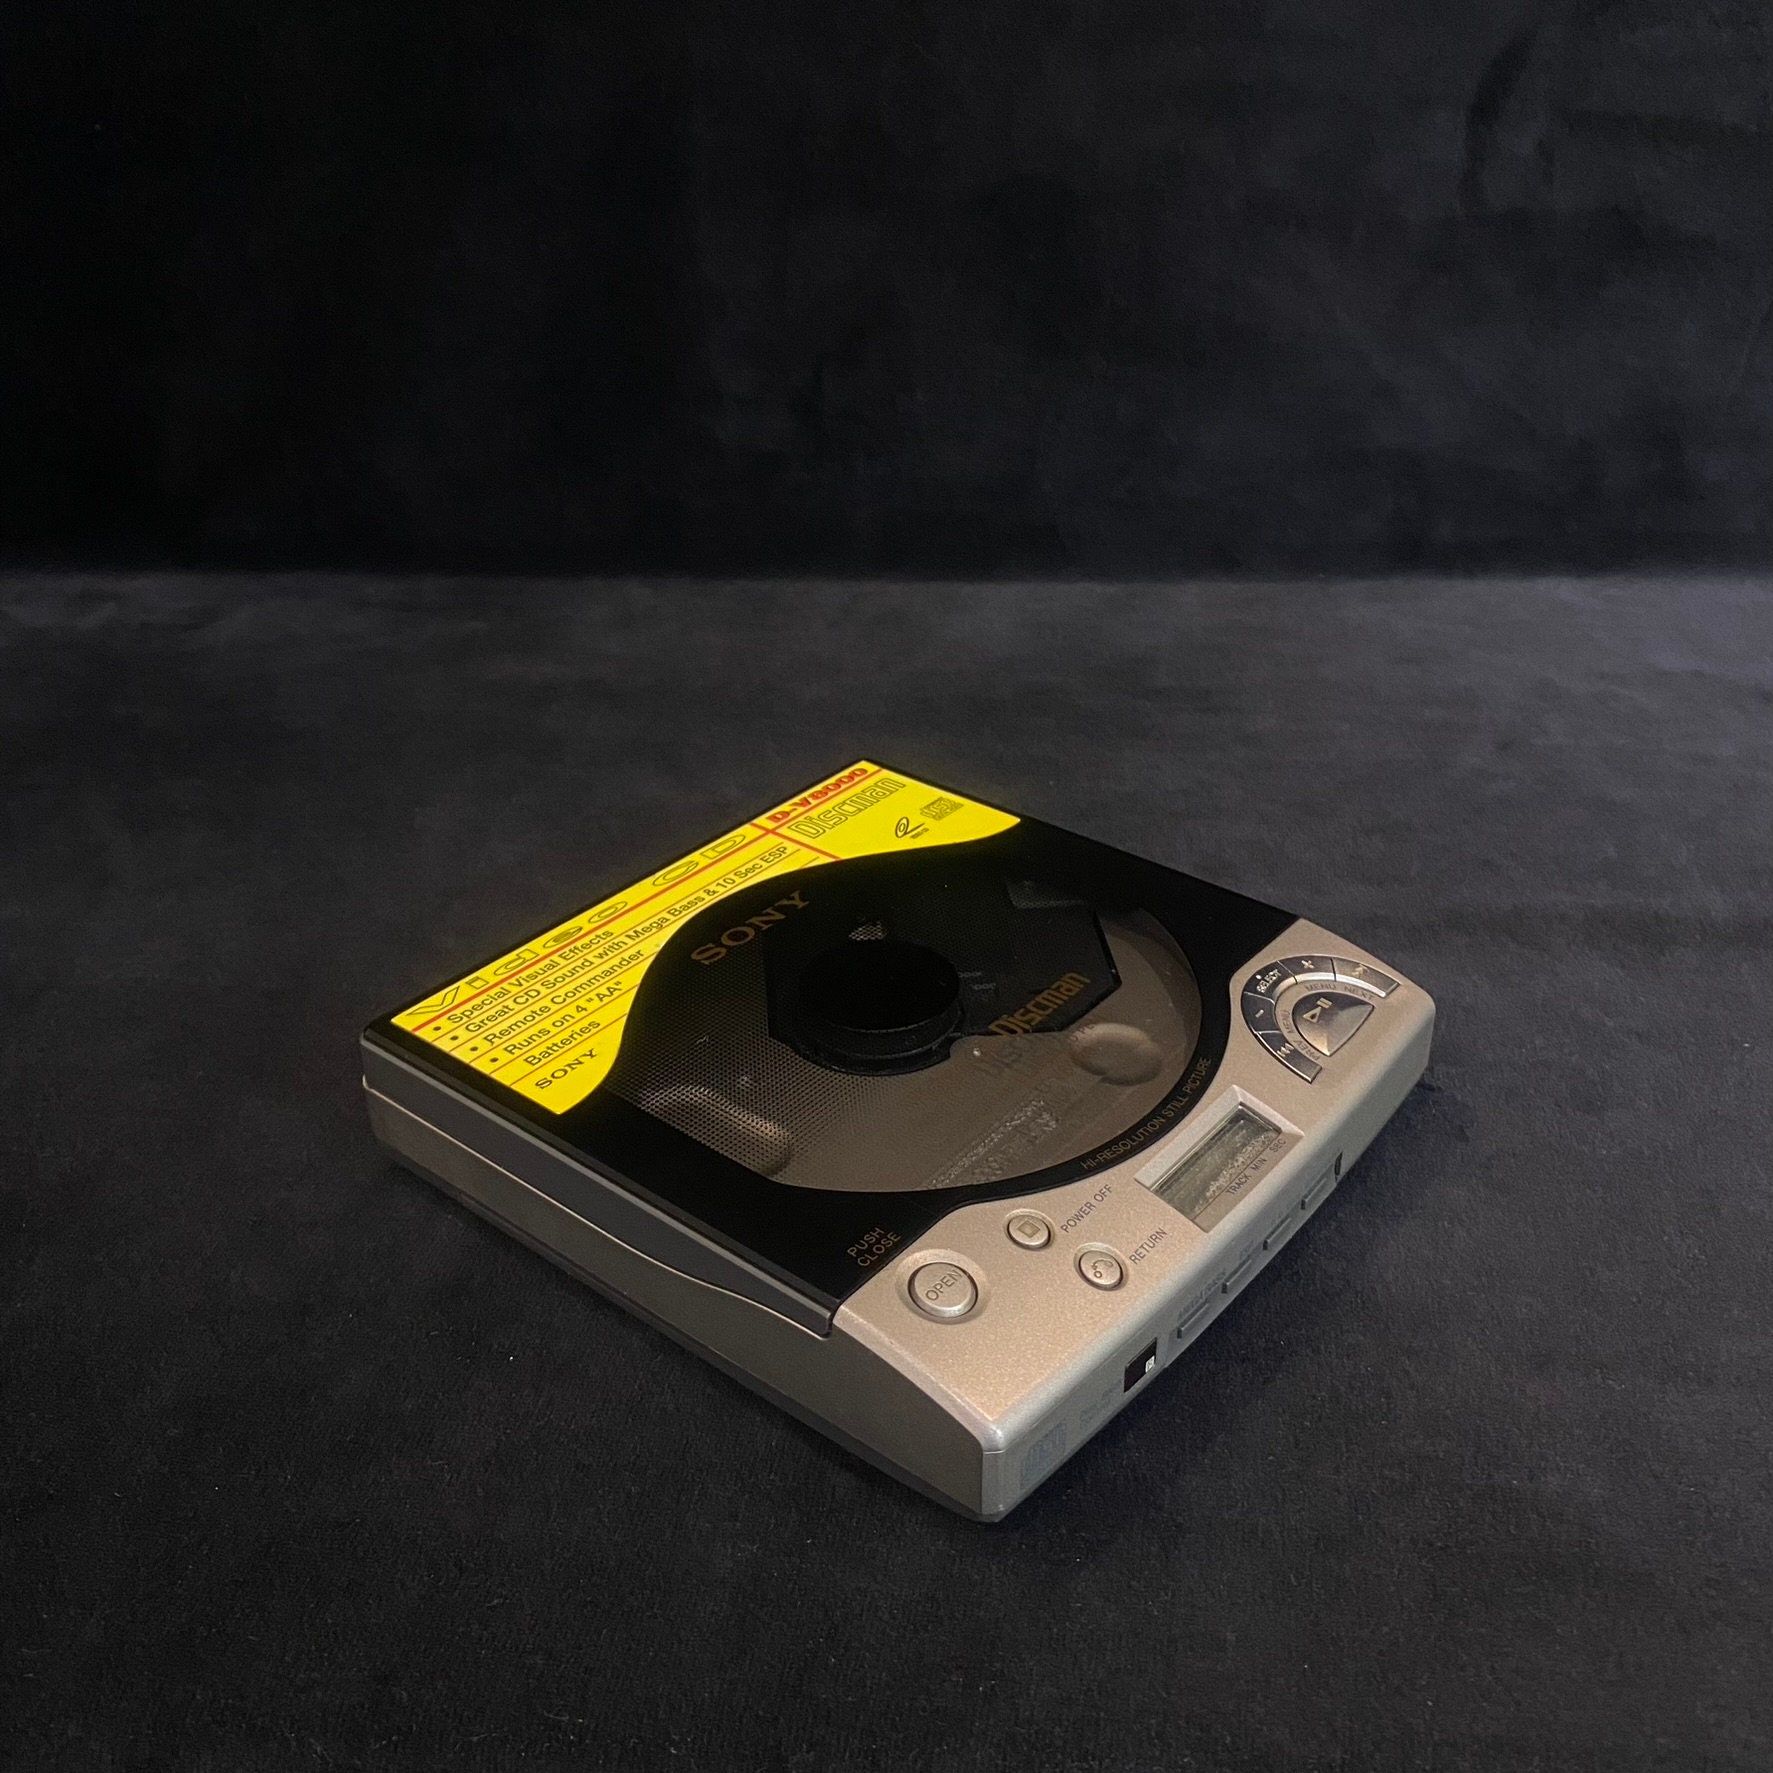 Museum of Portable Sound - The Design Evolution of the CD Walkman  (1984–2009) #Sony #Walkman #Discman #CD #iPod #iPhone #ProductDesign